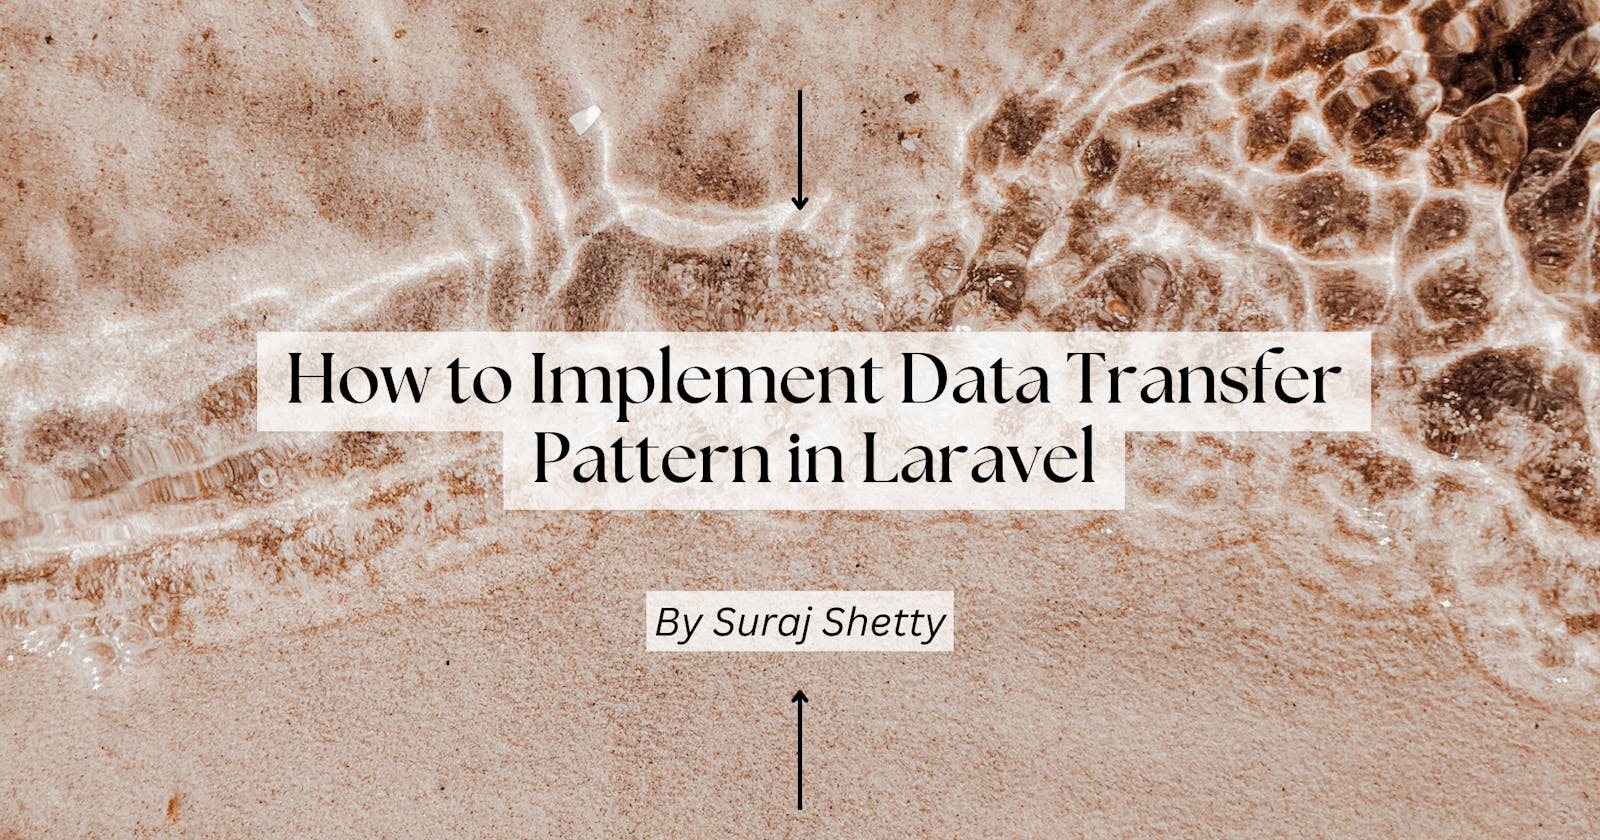 How to Implement Data Transfer Pattern in Laravel